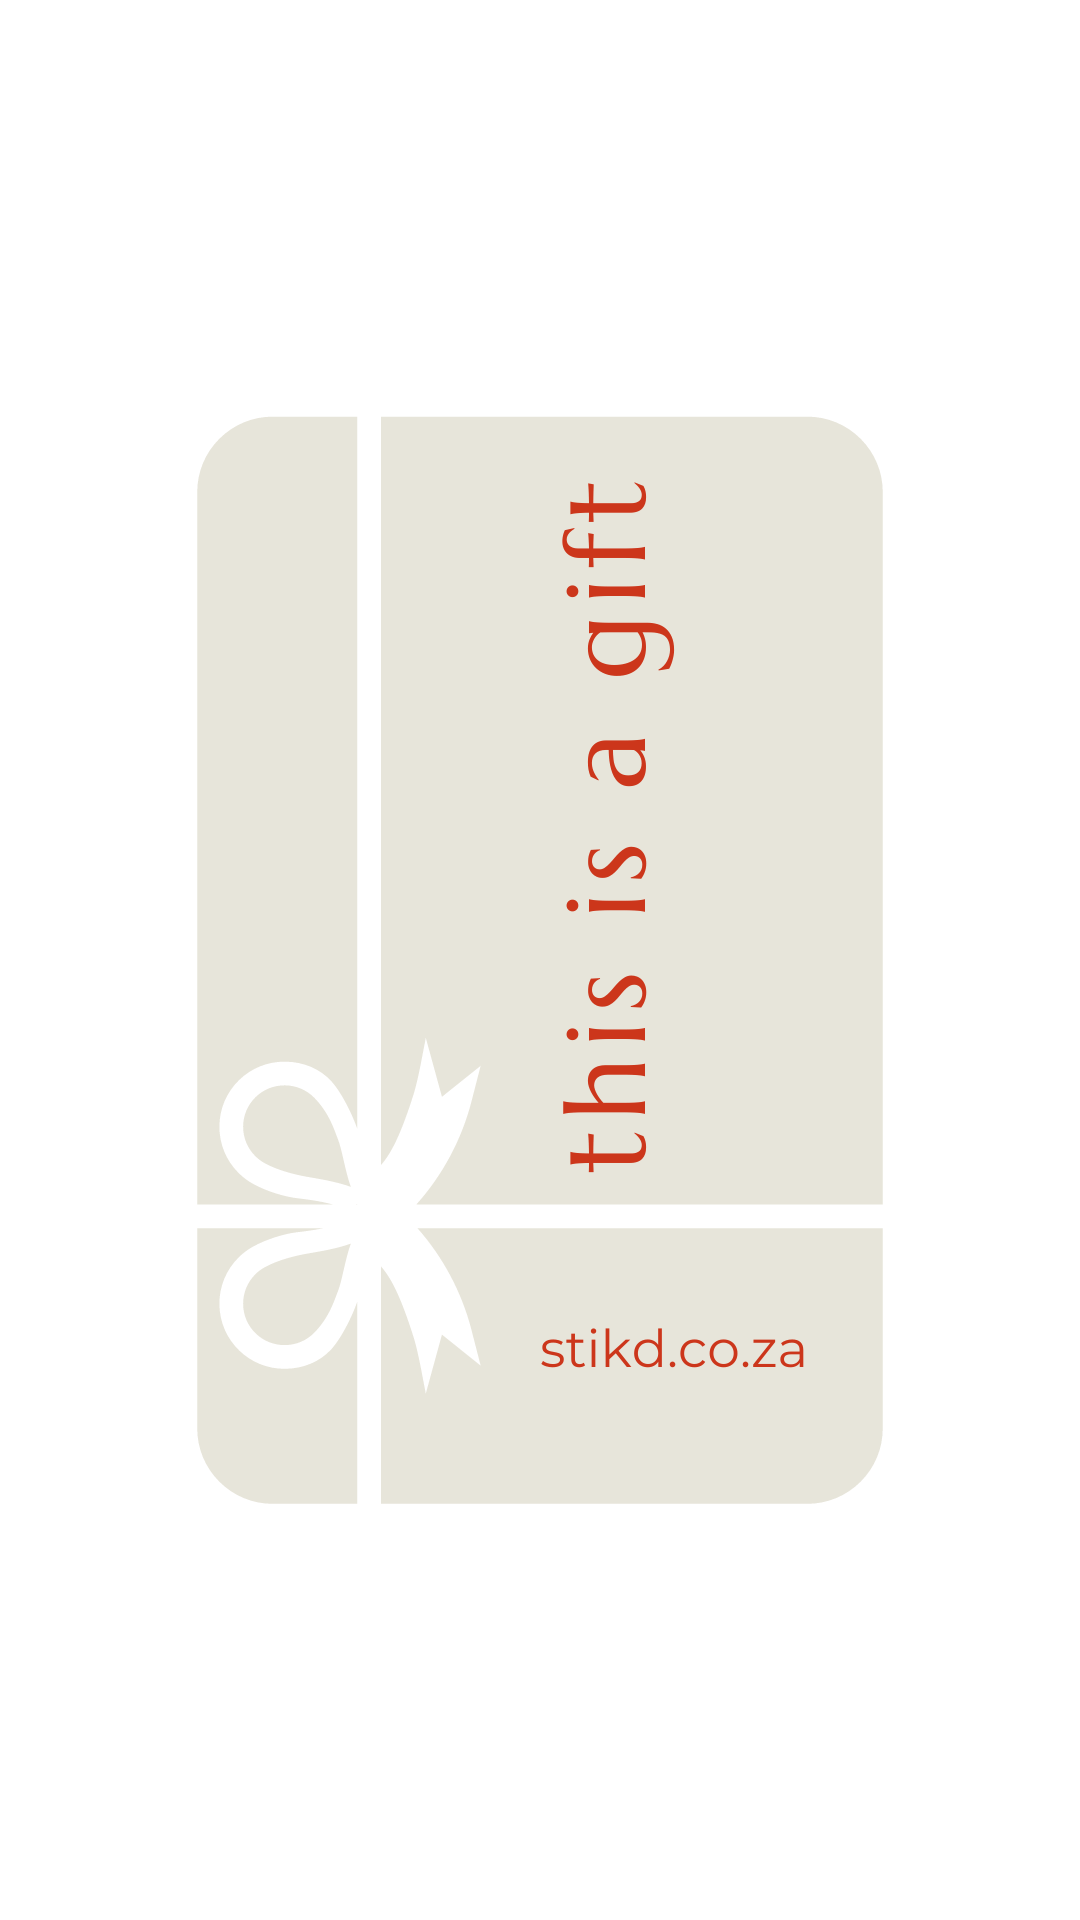 STIKD Gift Card - Stikd